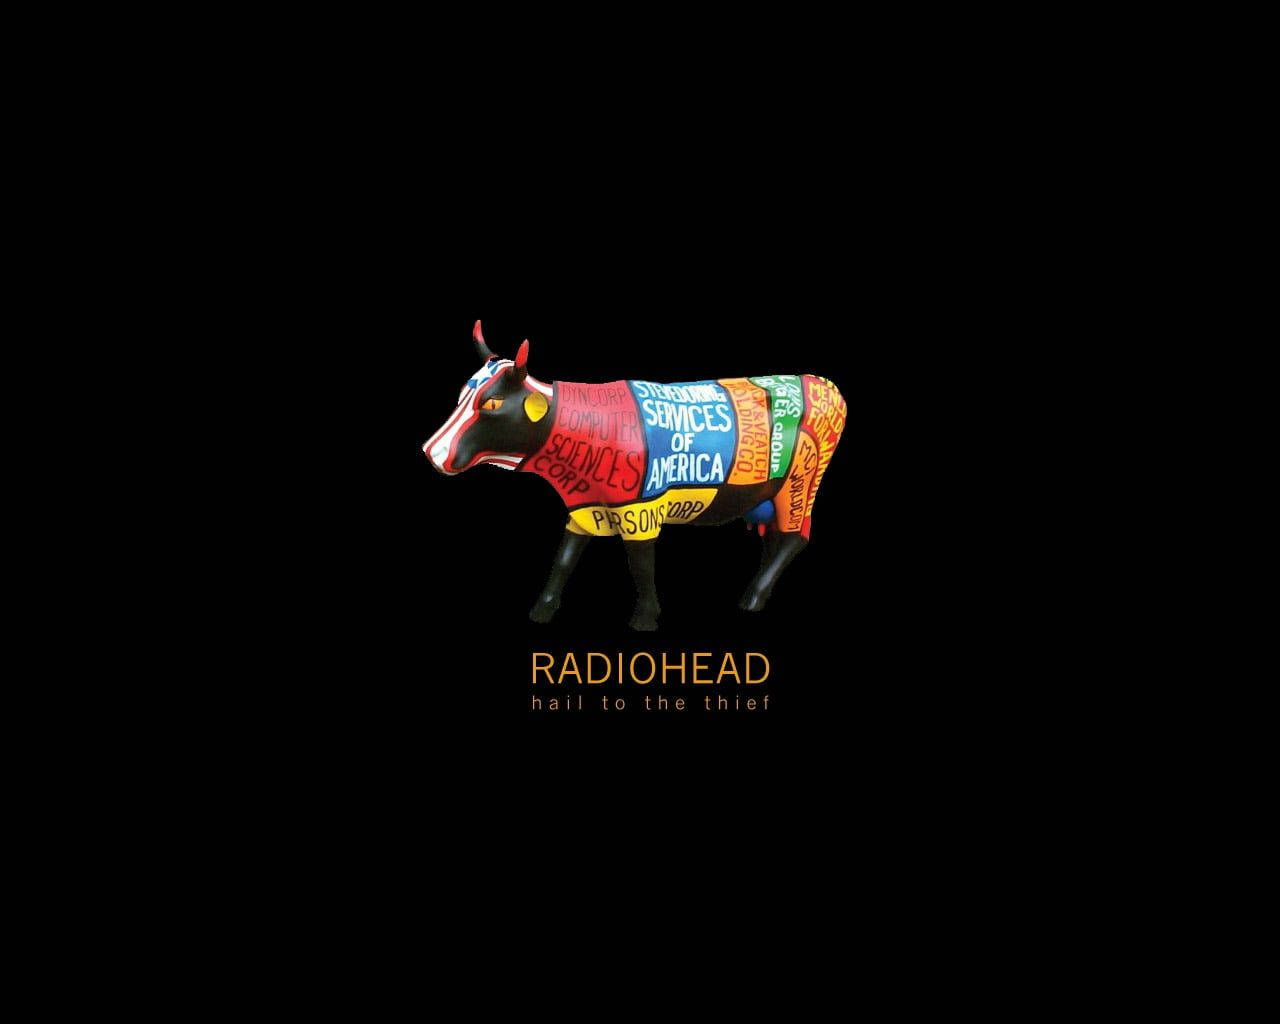 Radiohead Ko Hail To The Thief Wallpaper